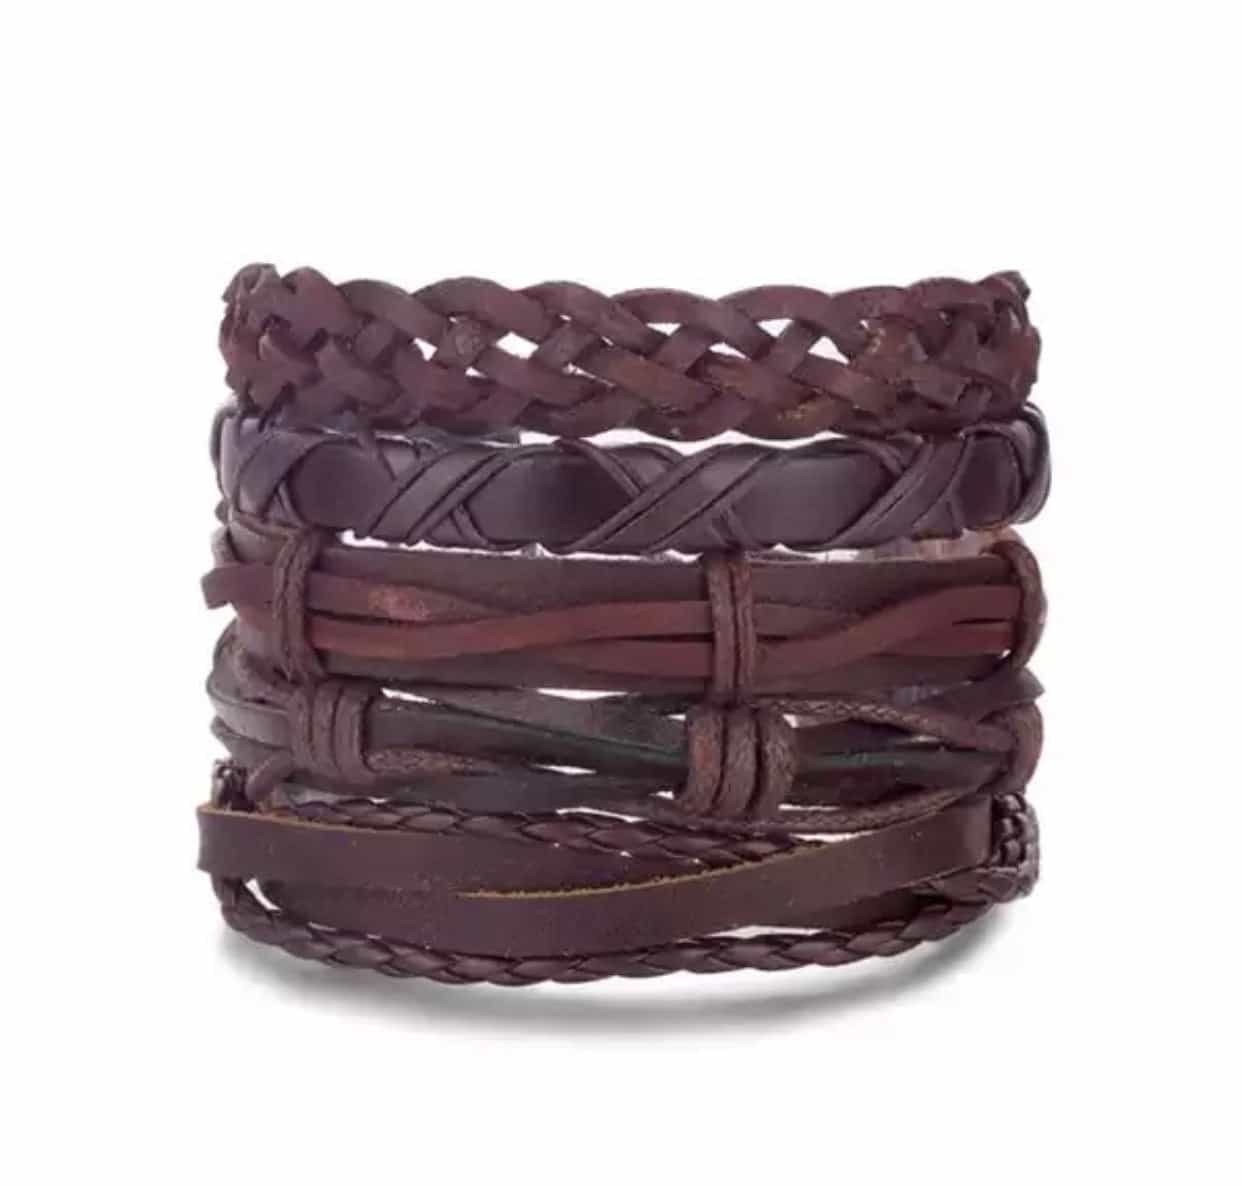 2pcs/Set Brown Leather Bracelet-Bracelet-All-Times-Gifts